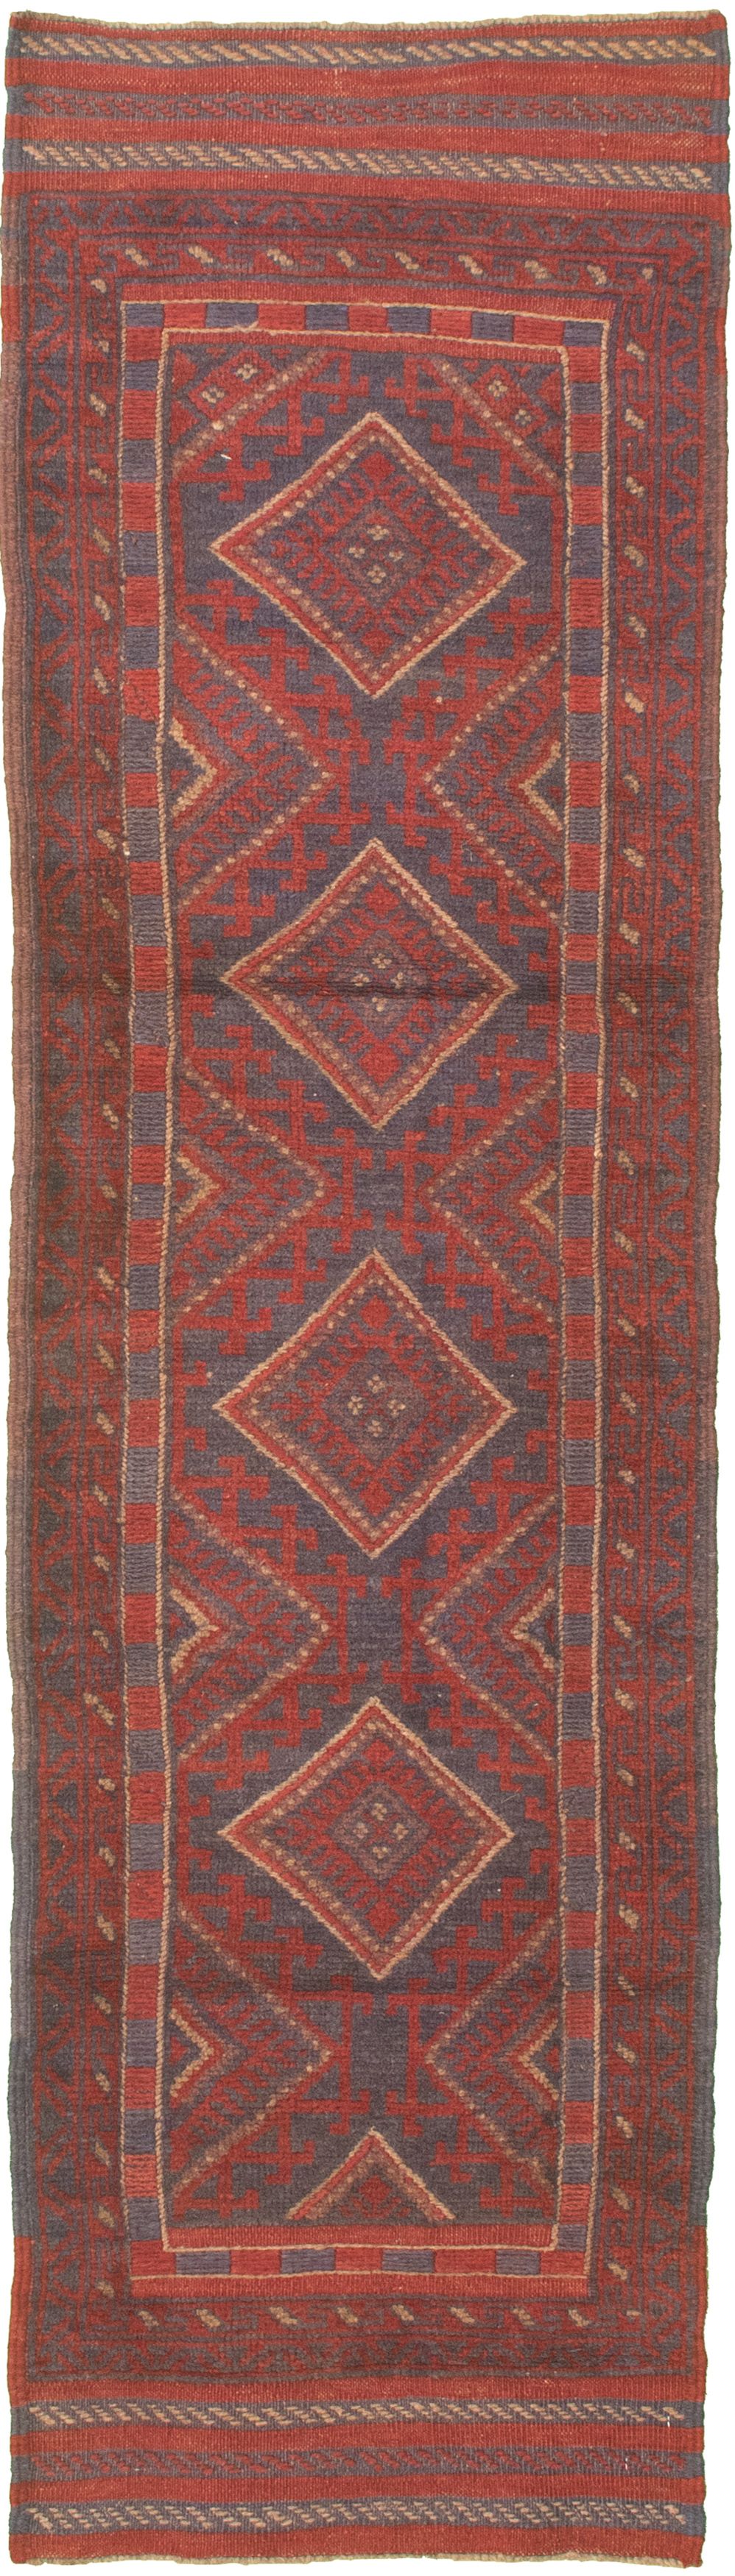 Hand-knotted Tajik Caucasian Red Wool Rug 1'11" x 8'6"  Size: 1'11" x 8'6"  